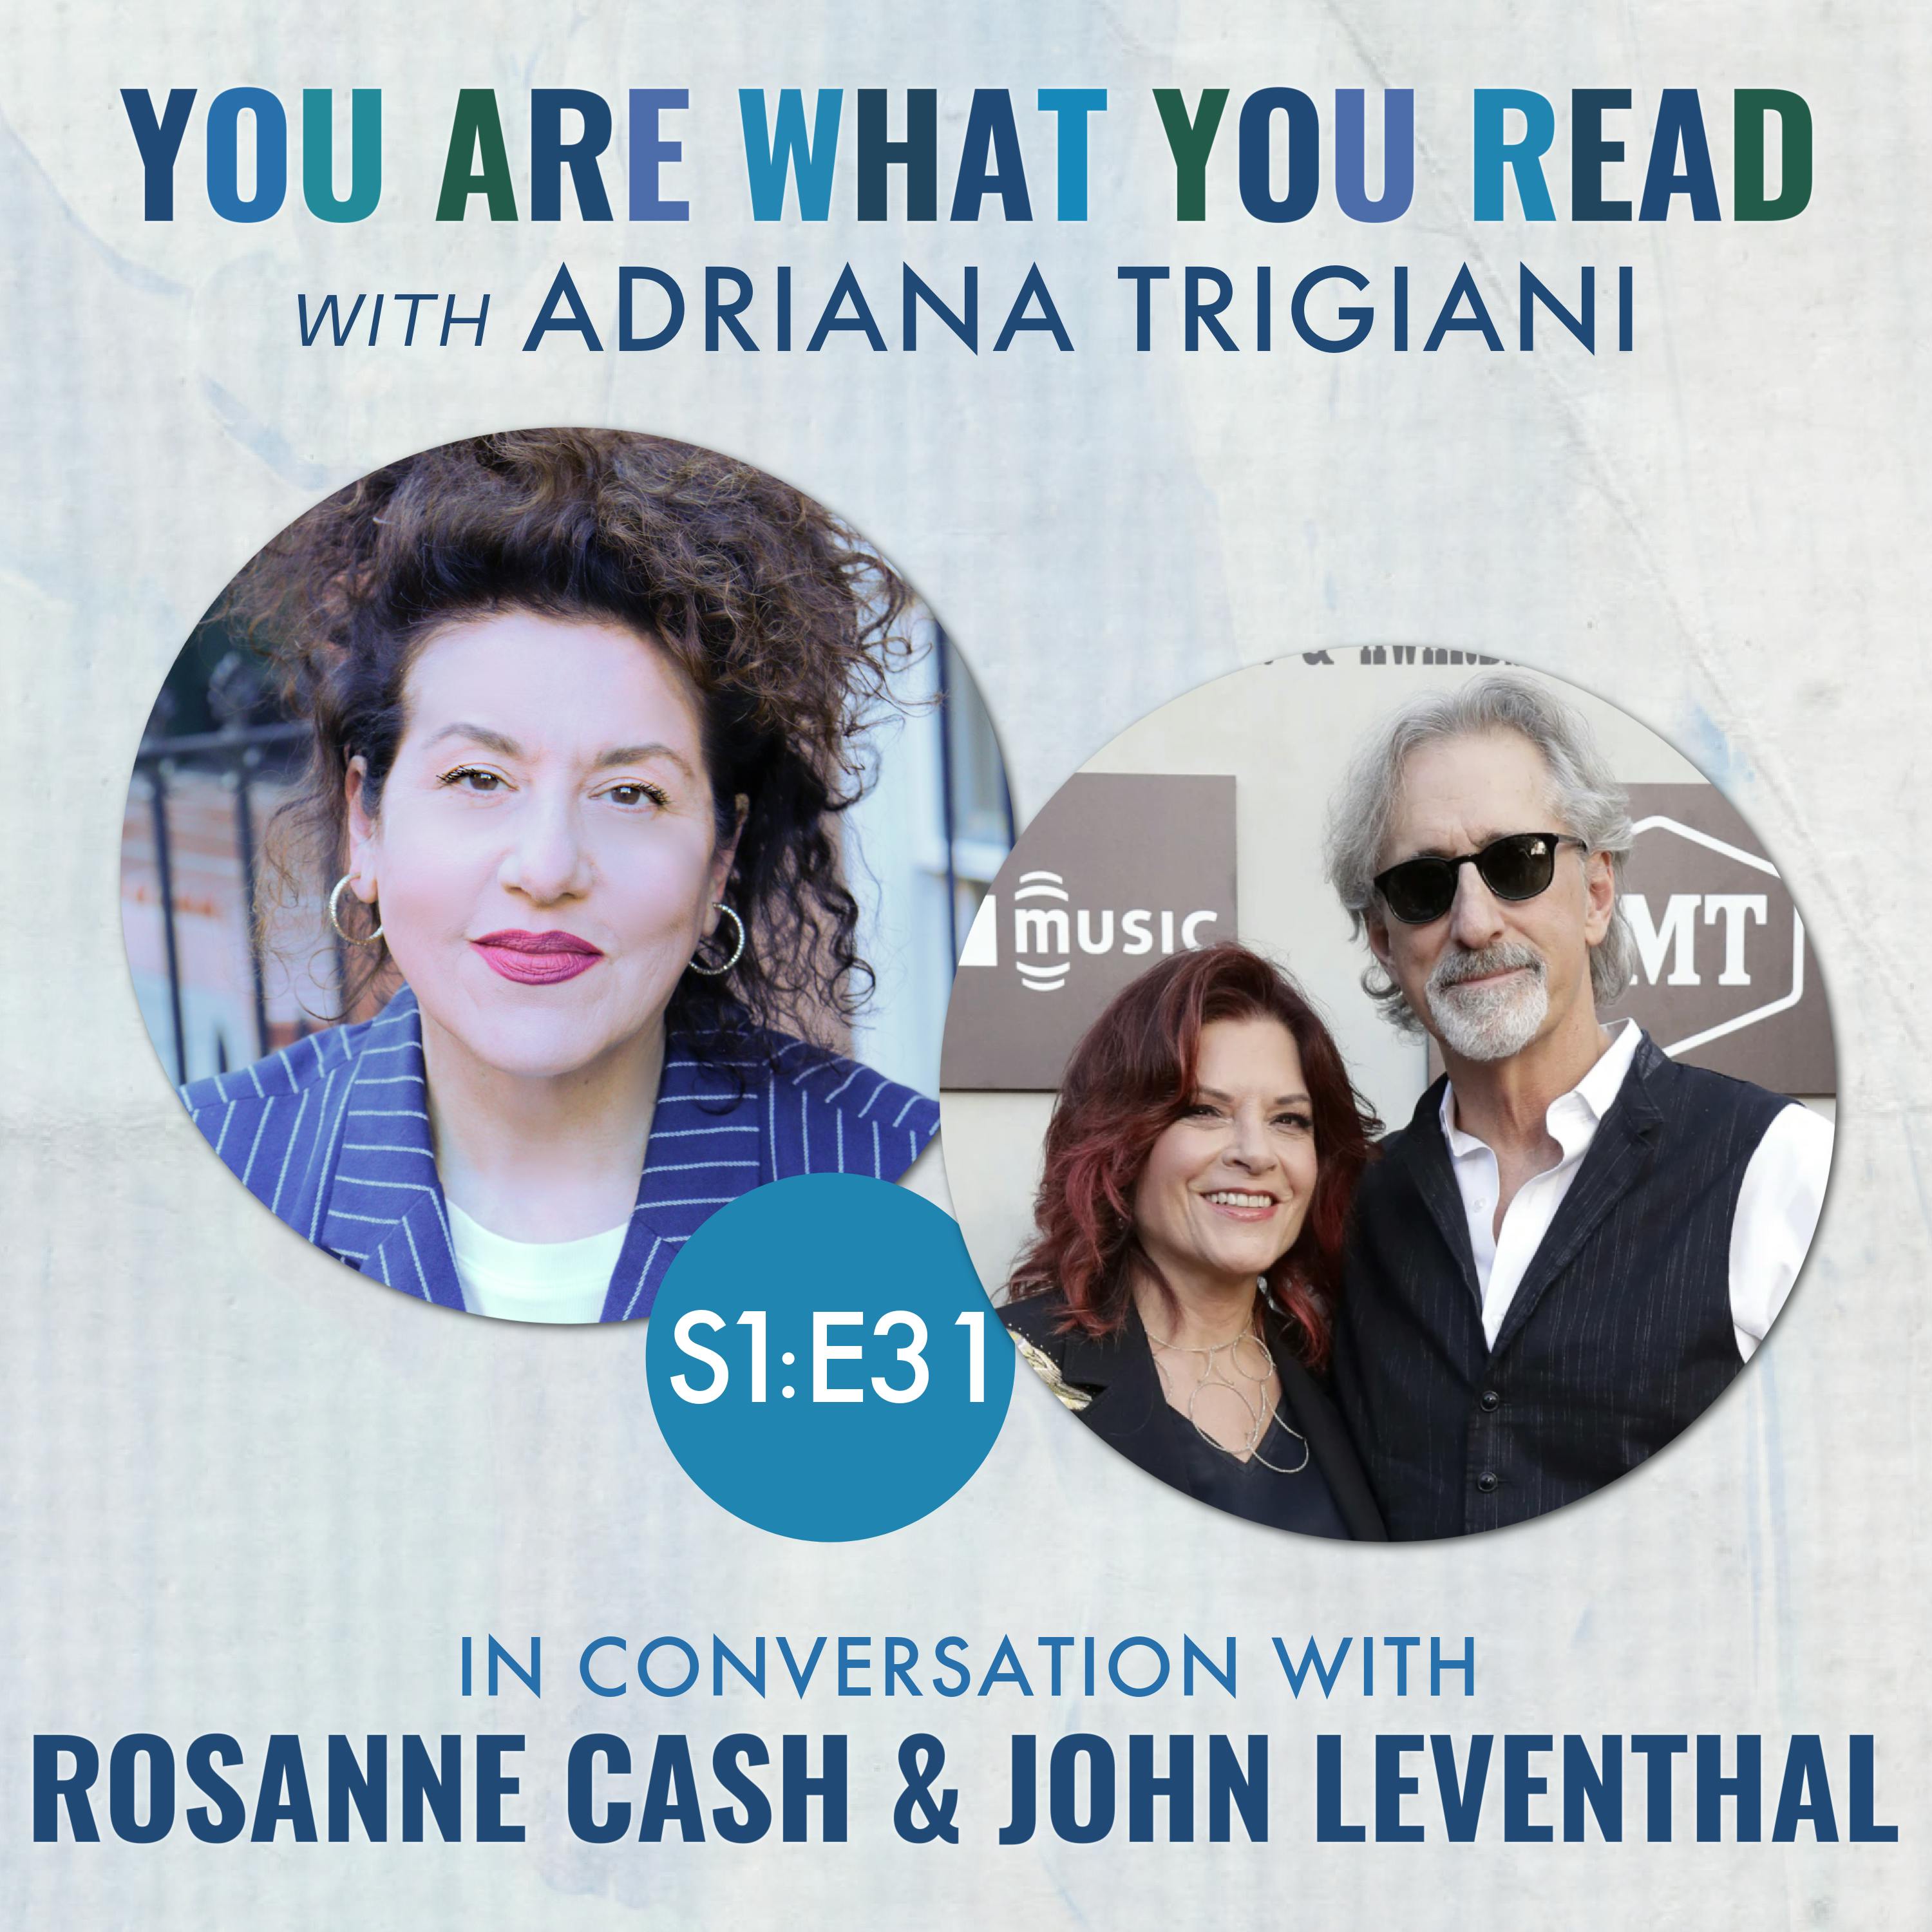 Rosanne Cash and John Leventhal: Storytelling through song